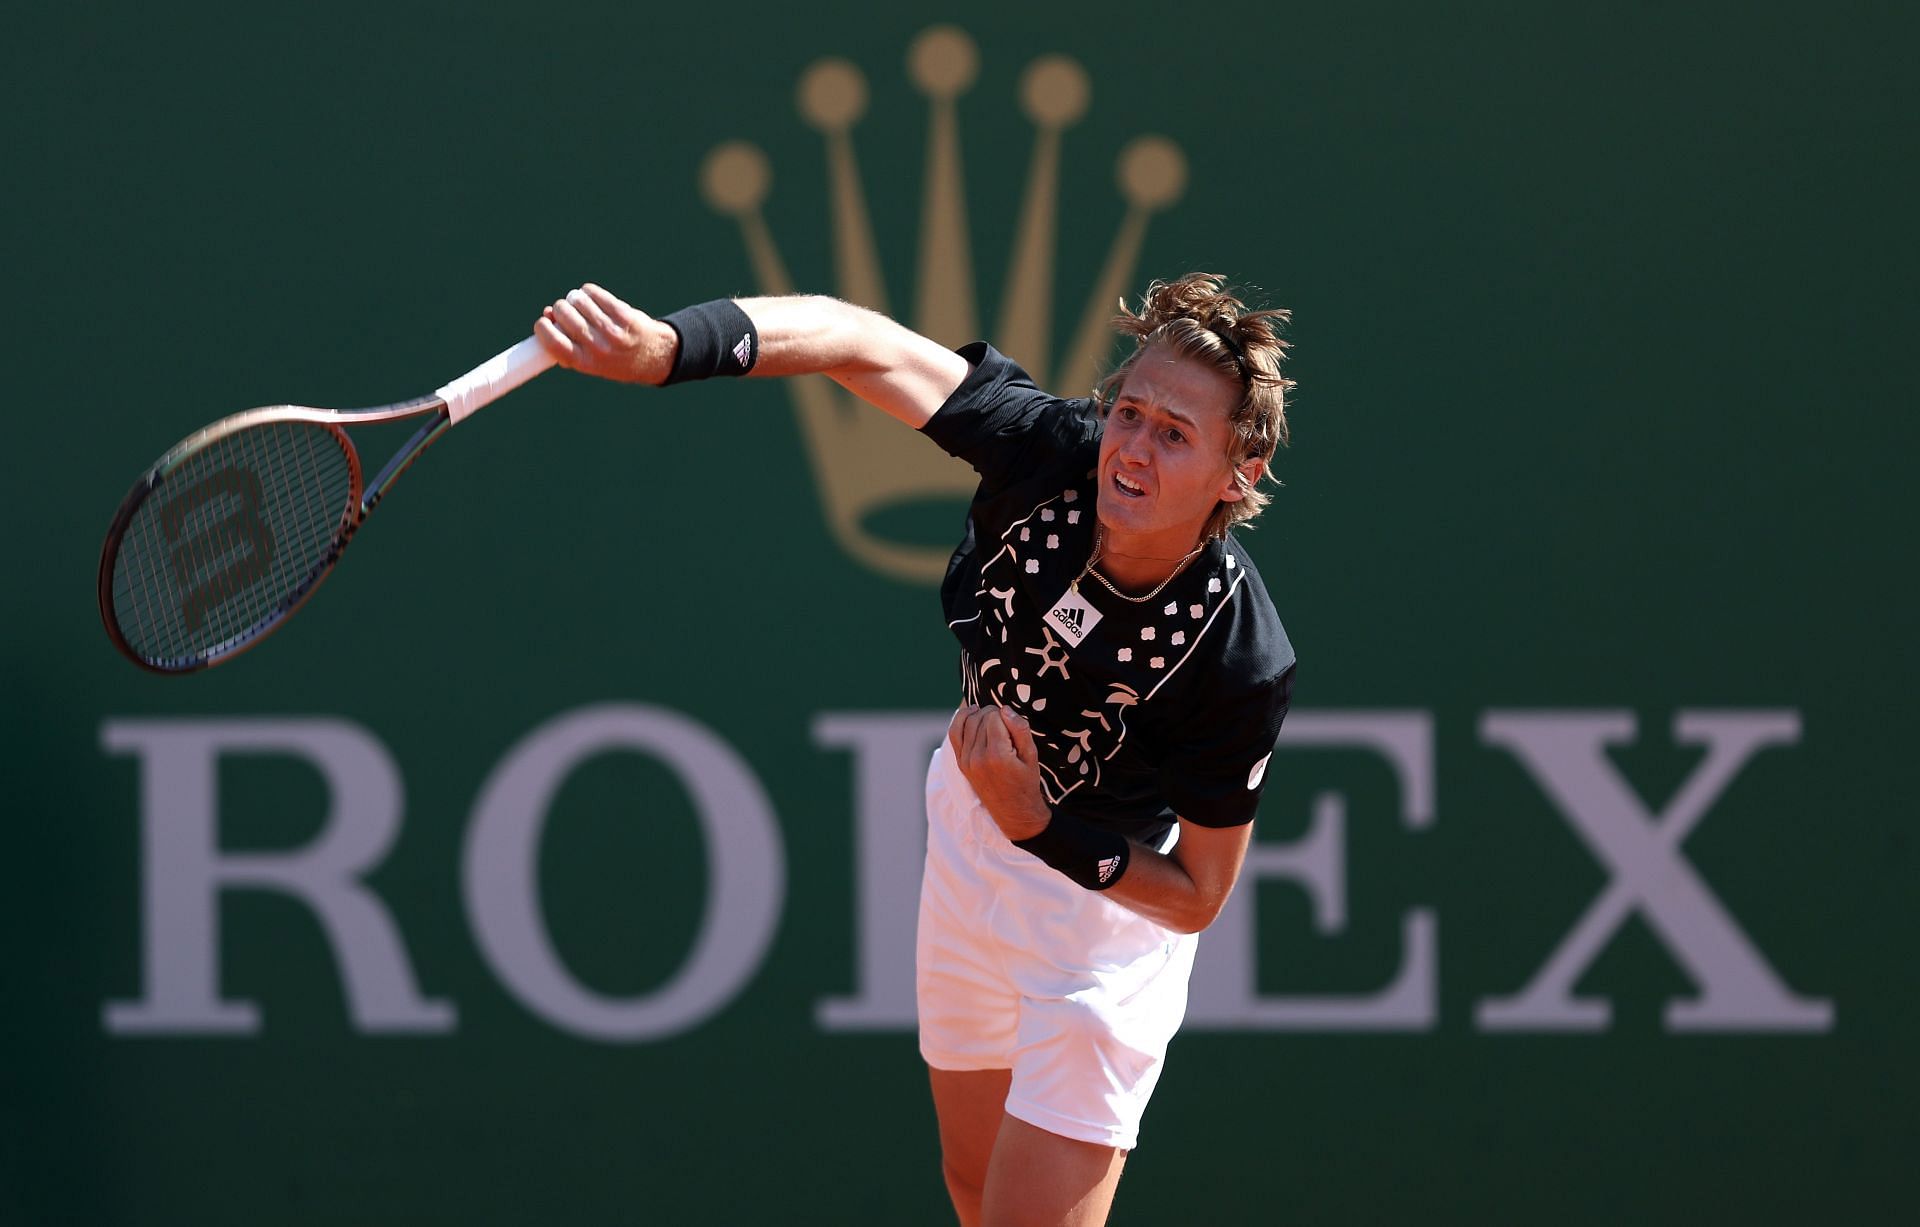 Sebastian Korda lost to his doubles partner Taylor Fritz in Monte-Carlo